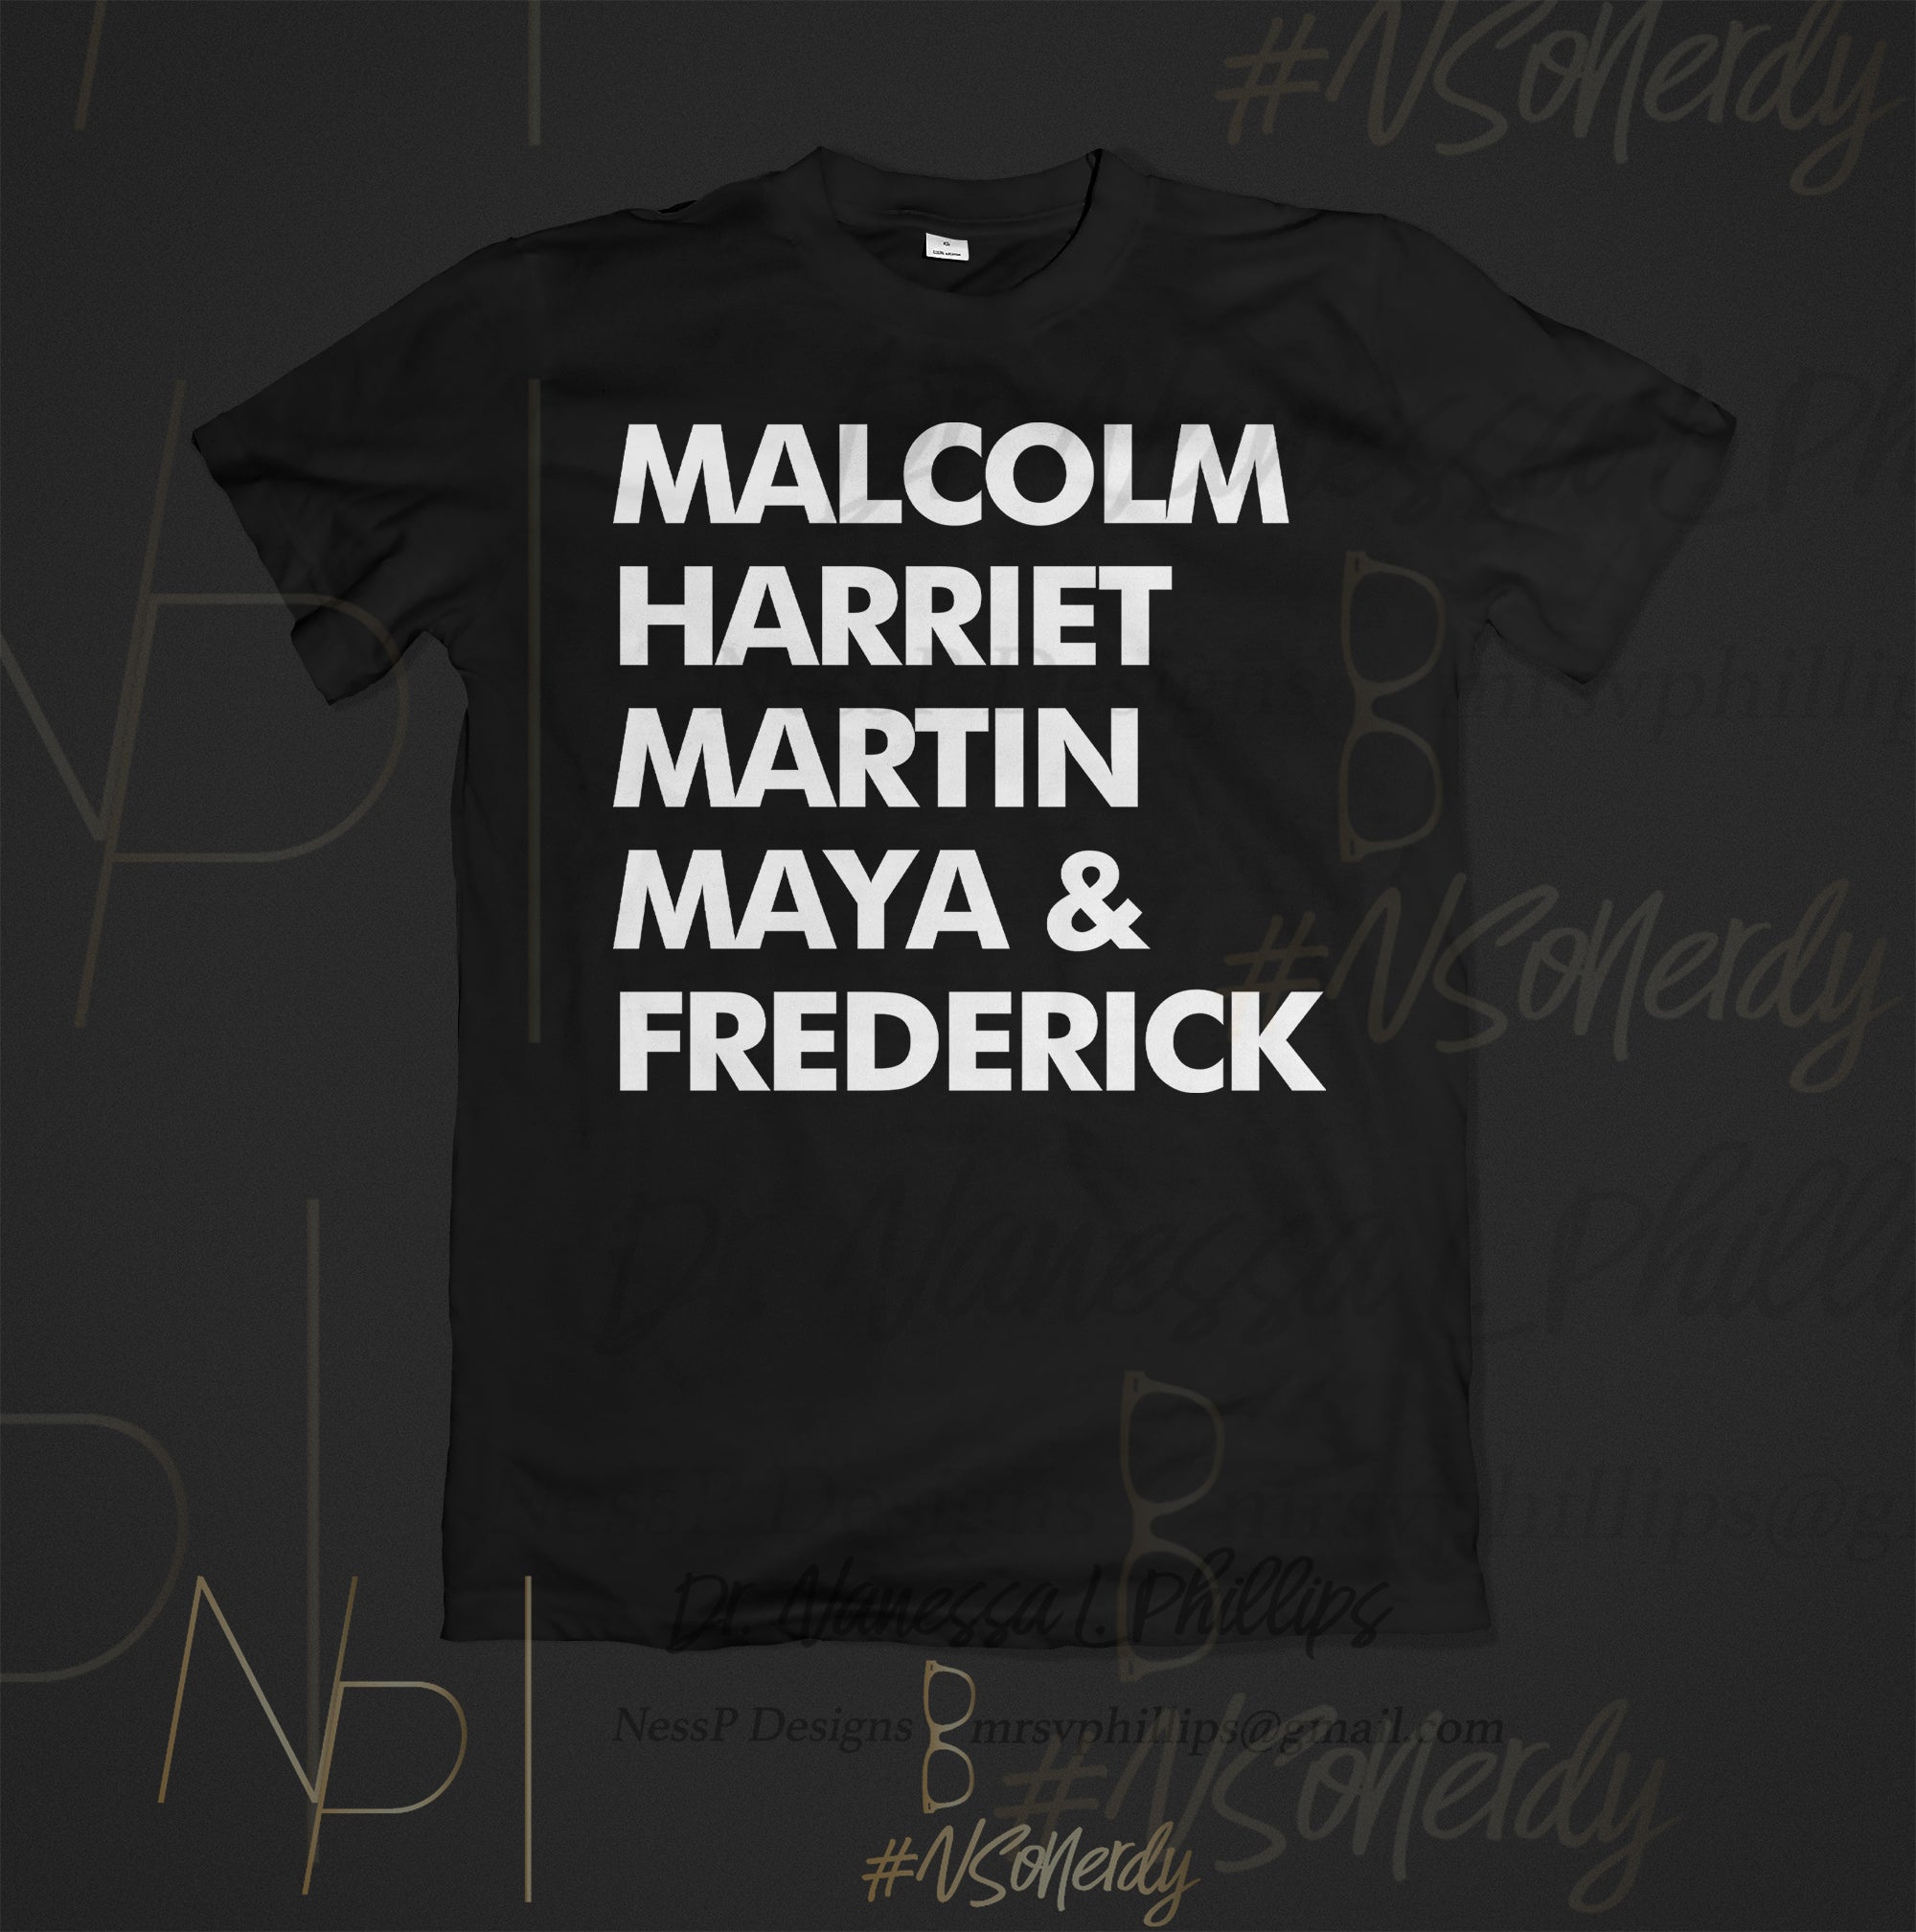 Malcolm, Harriet, Martin, Maya & Frederick